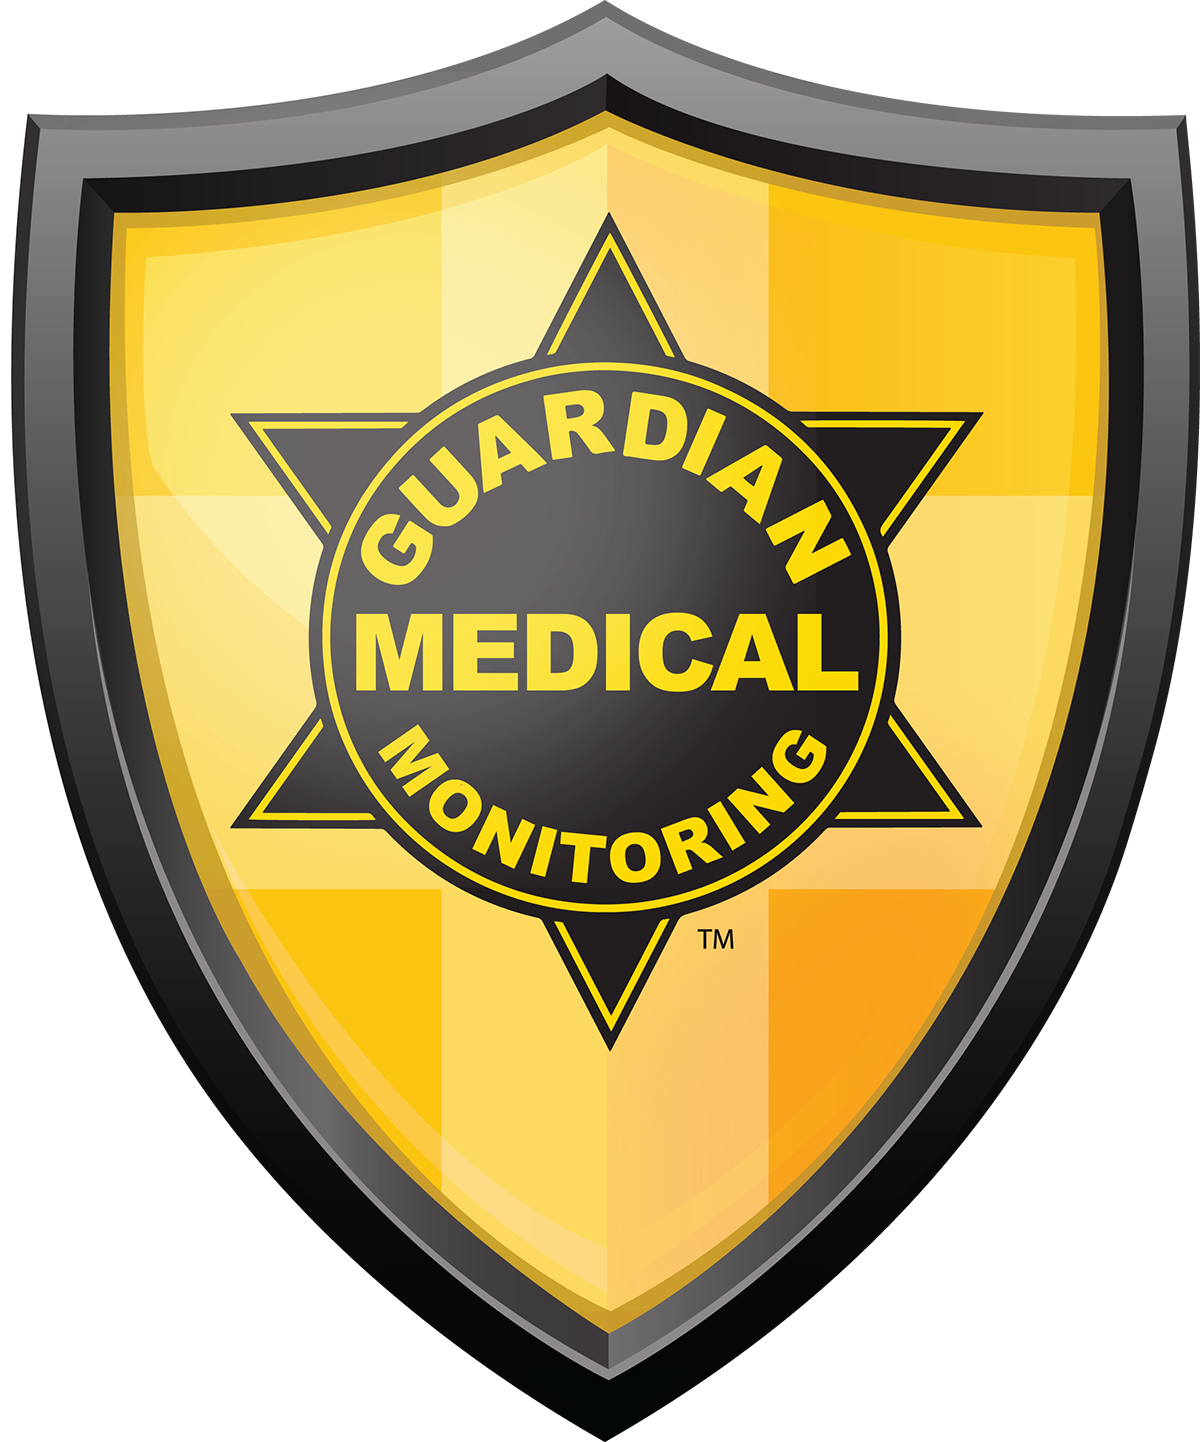 Guardian Medical Monitoring